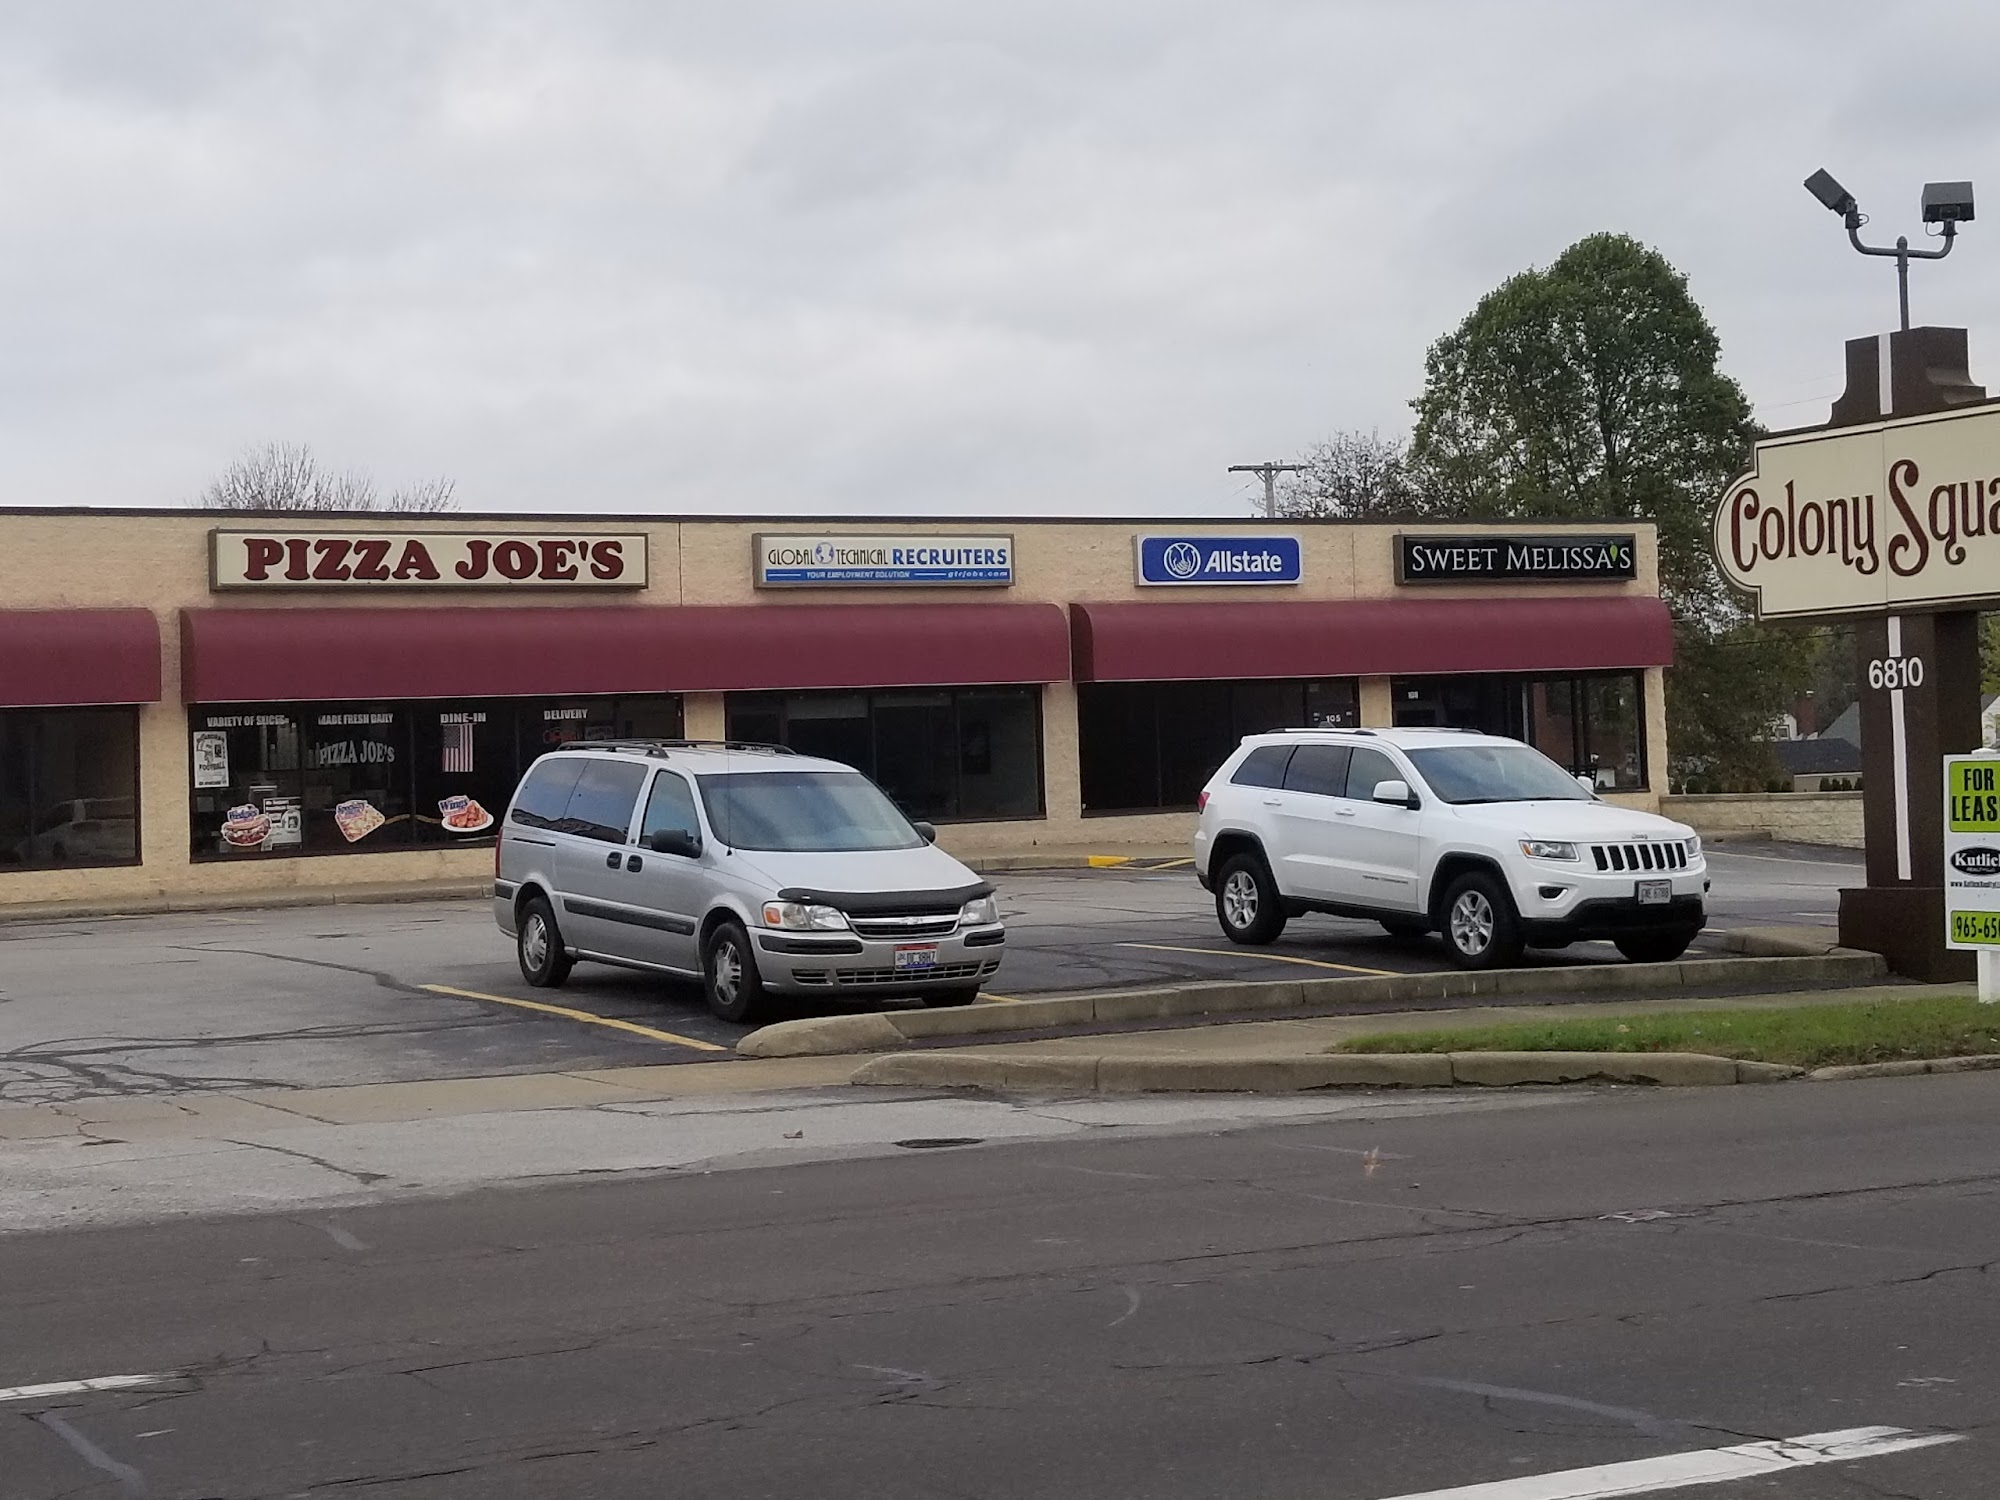 Pizza Joe's